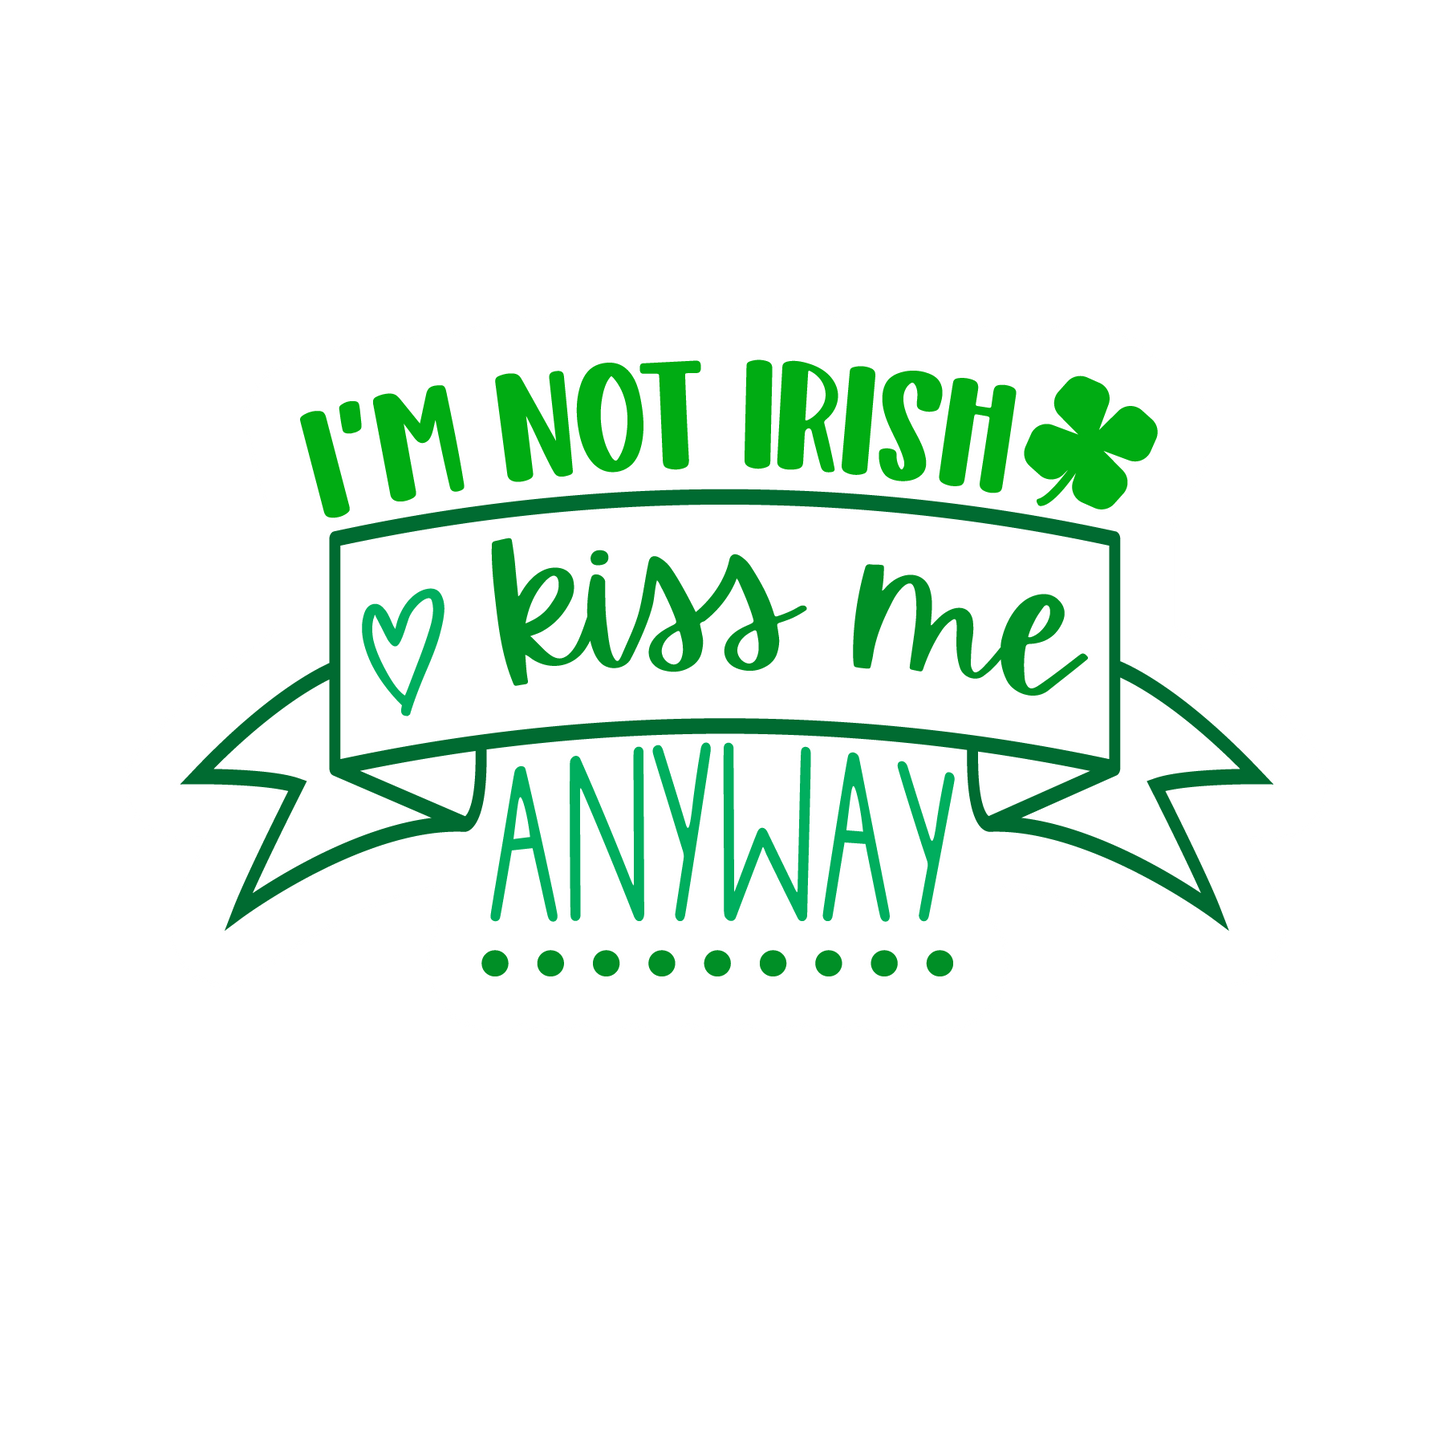 Inspirational Quote I'm Not Irish Kiss Me Anyway. Motivational Sticker Vinyl Decal Motivation Stickers- 5" Vinyl Sticker Waterproof